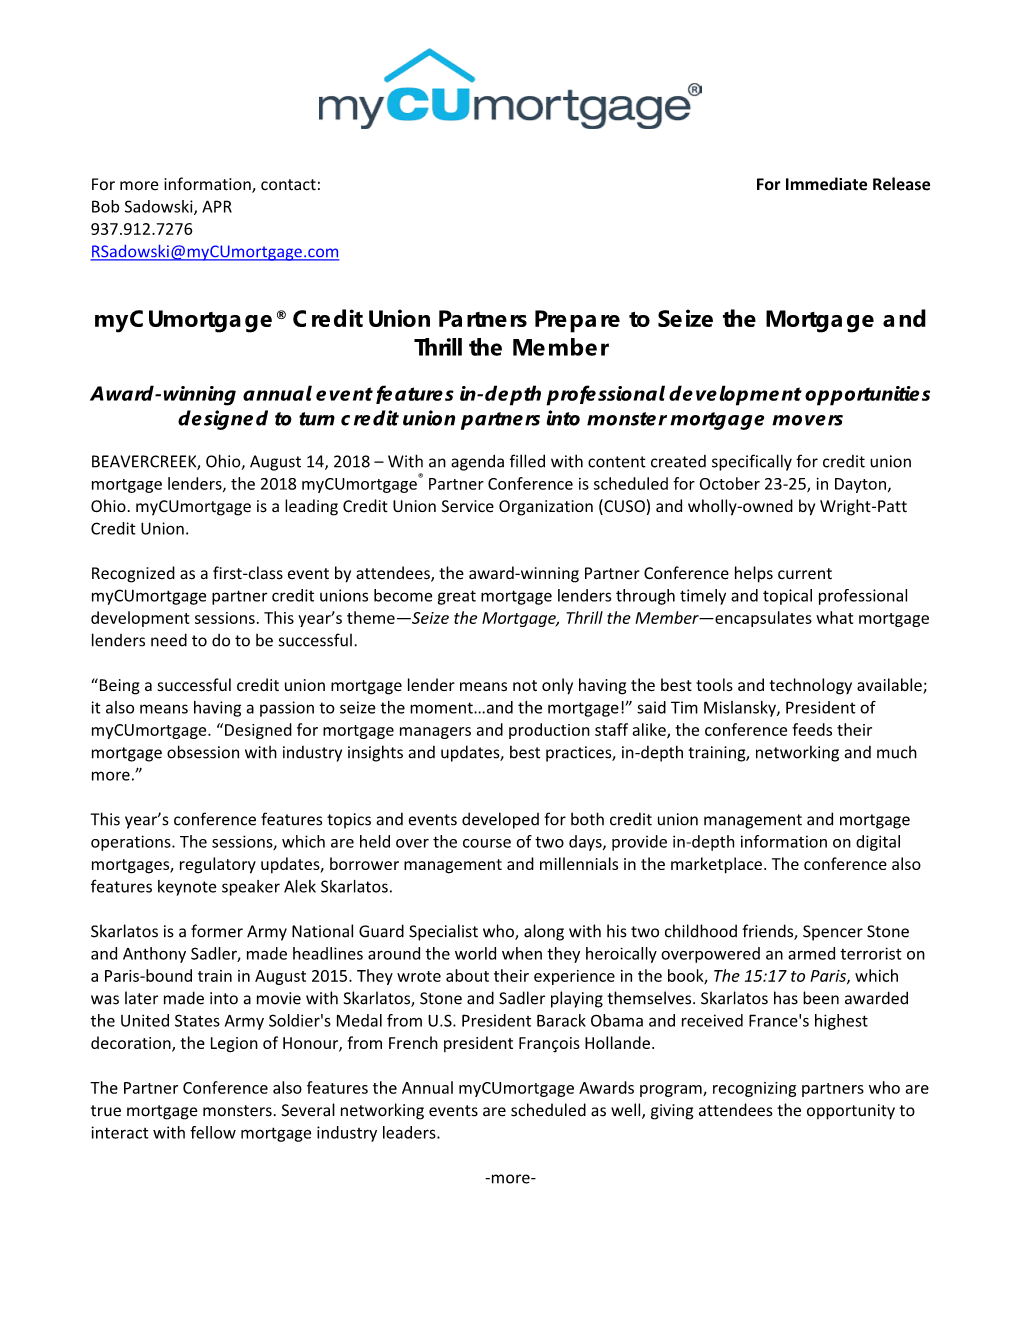 08/14/2018: Mycumortgage Credit Union Partners Prepare to Seize